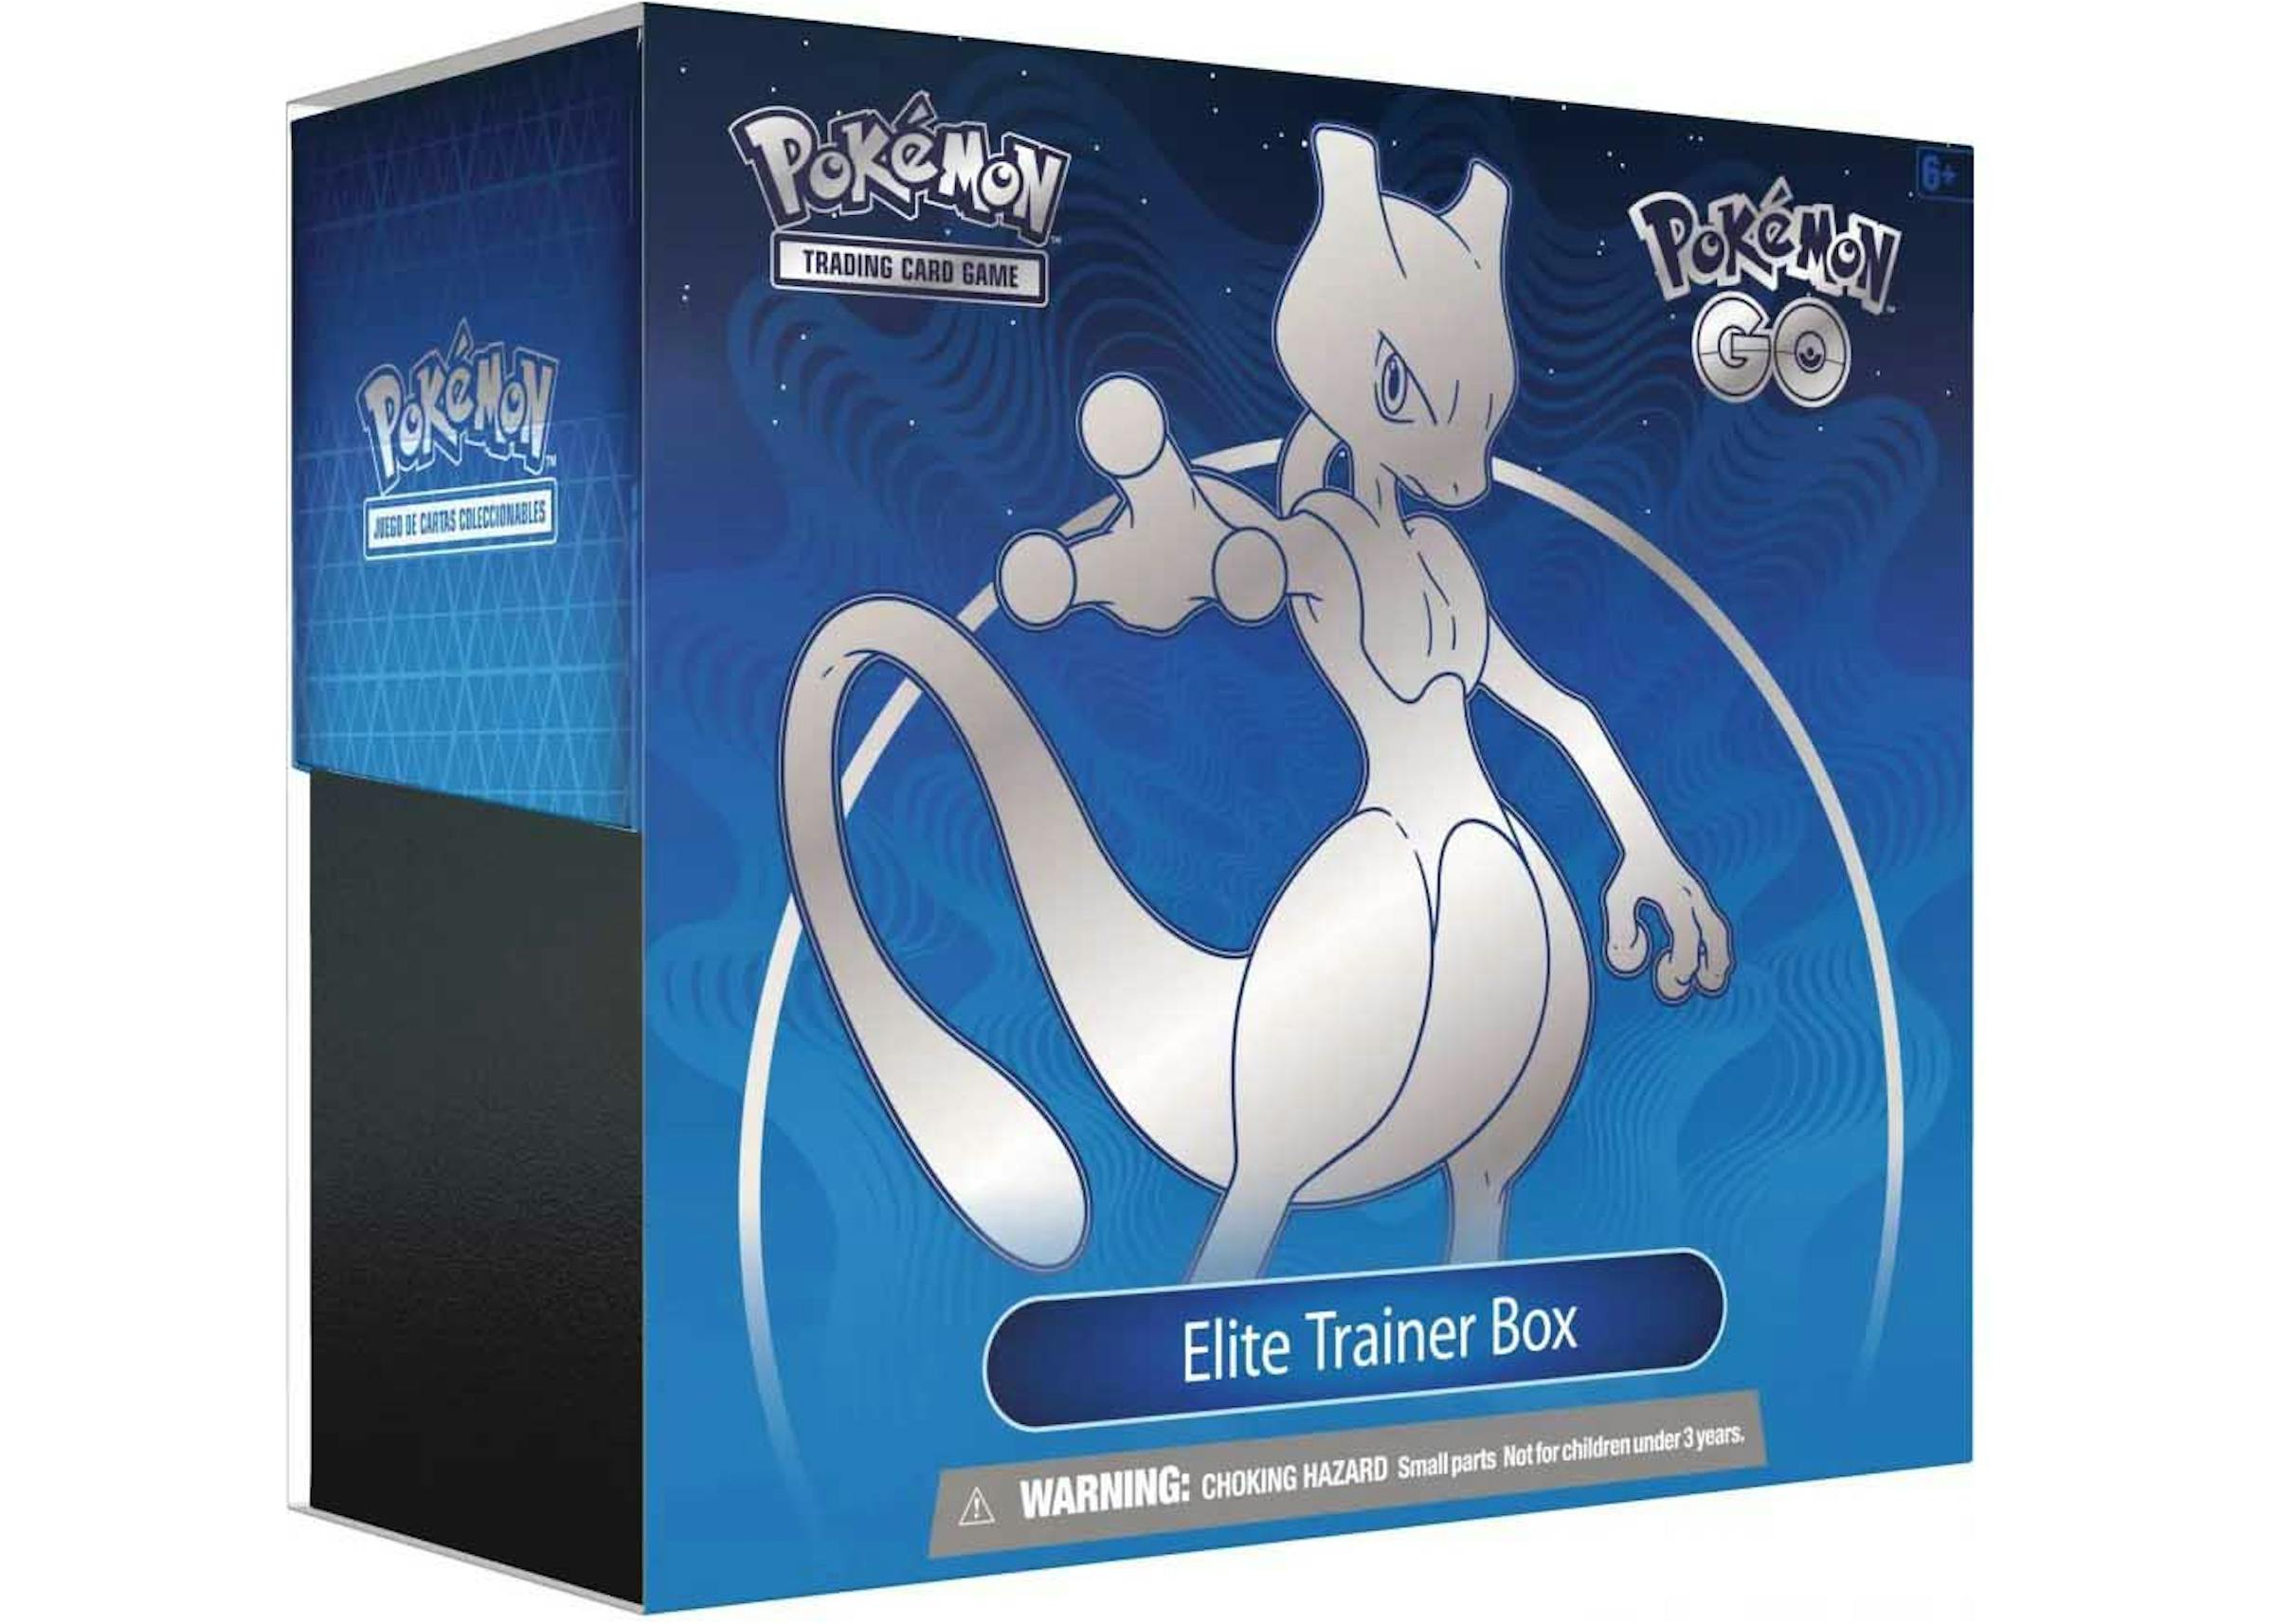 Pokémon TCG Pokémon GO Elite Trainer Box - US